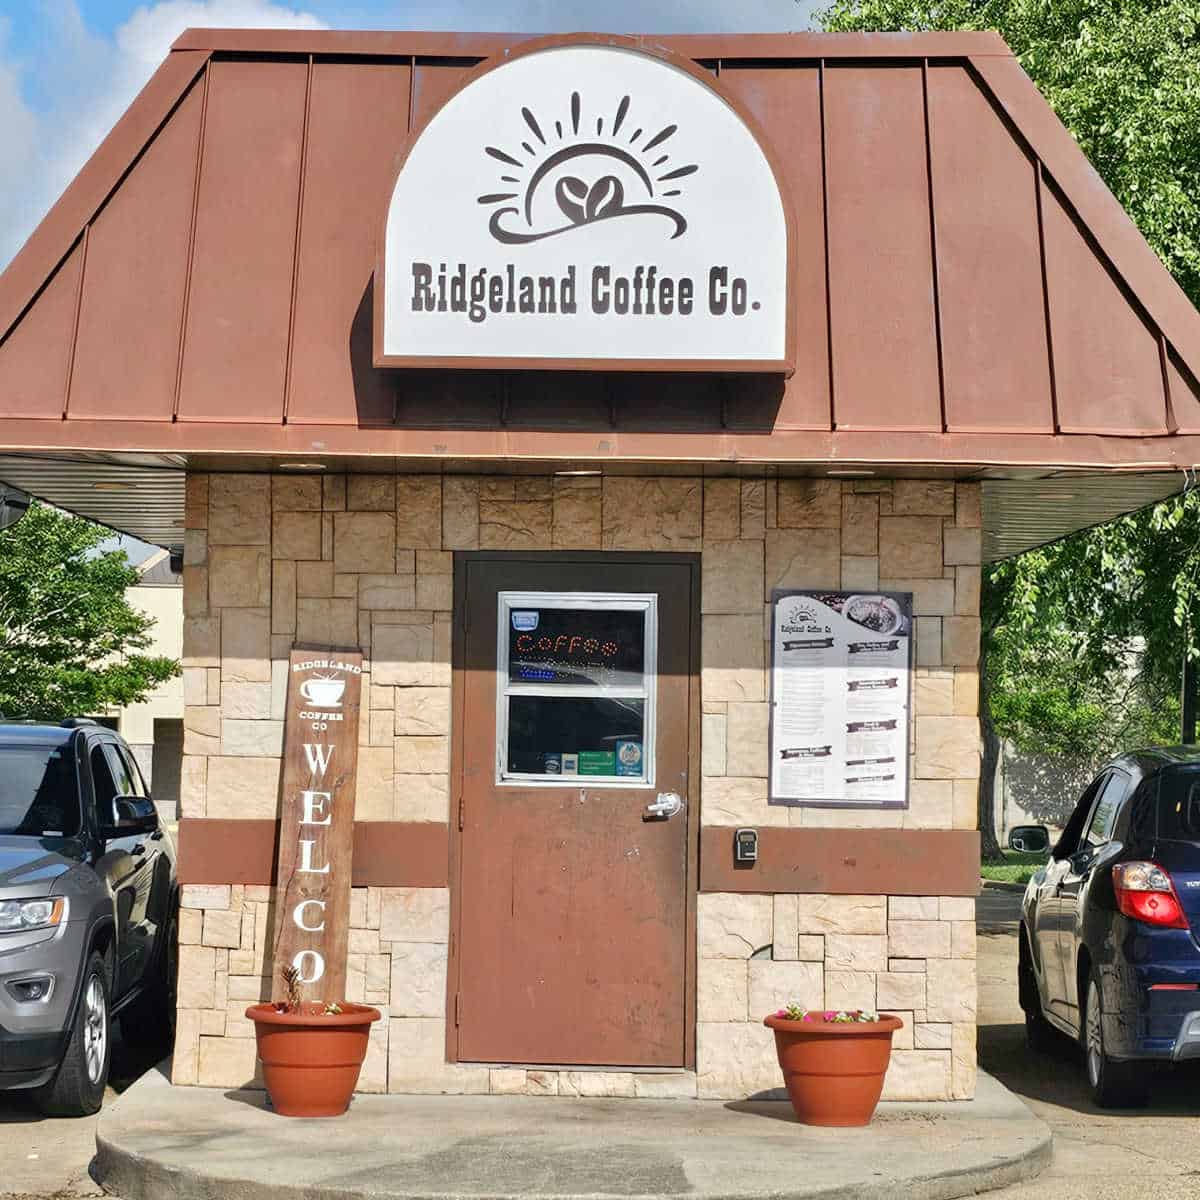 Ridgeland Coffee Co. Drive thru coffee shop with welcome sign